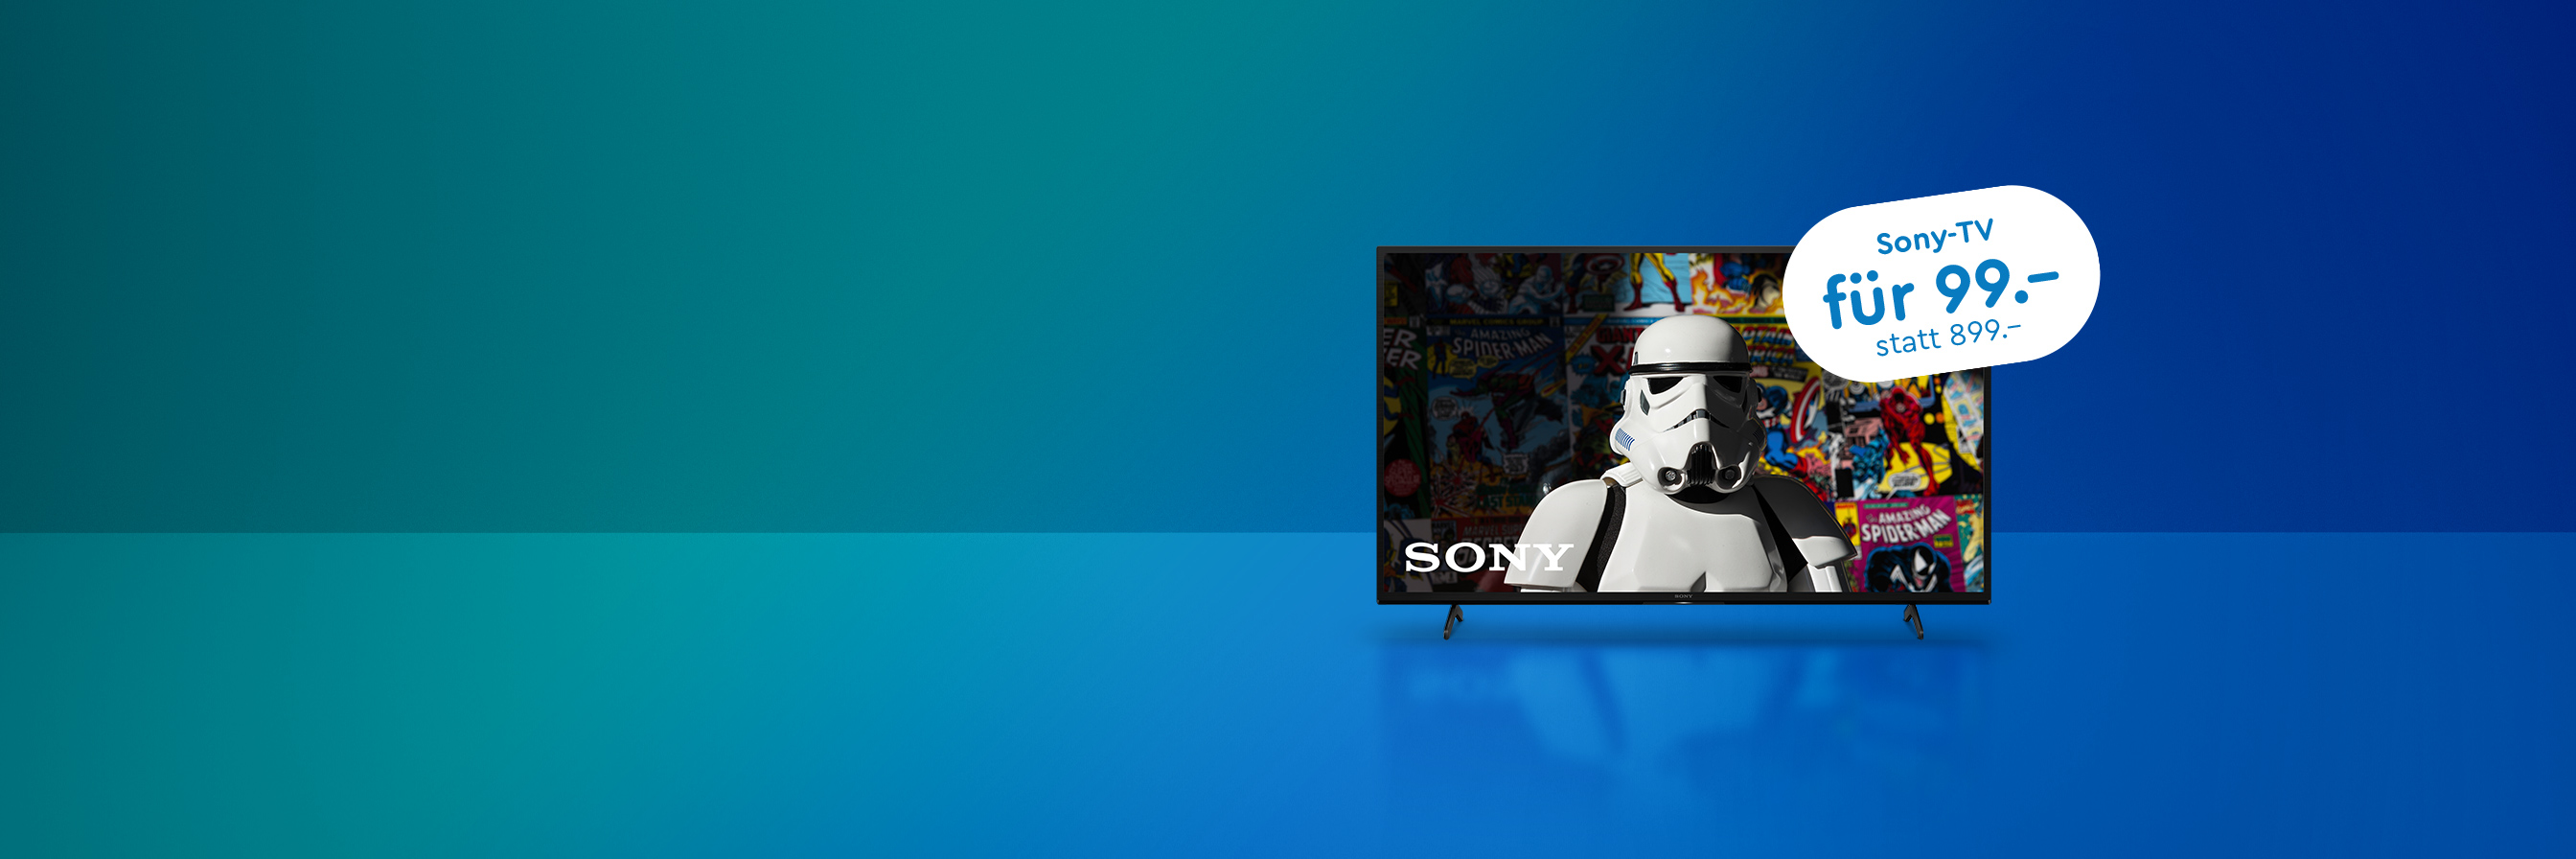 Sony-TV für 99.- statt 899.- 